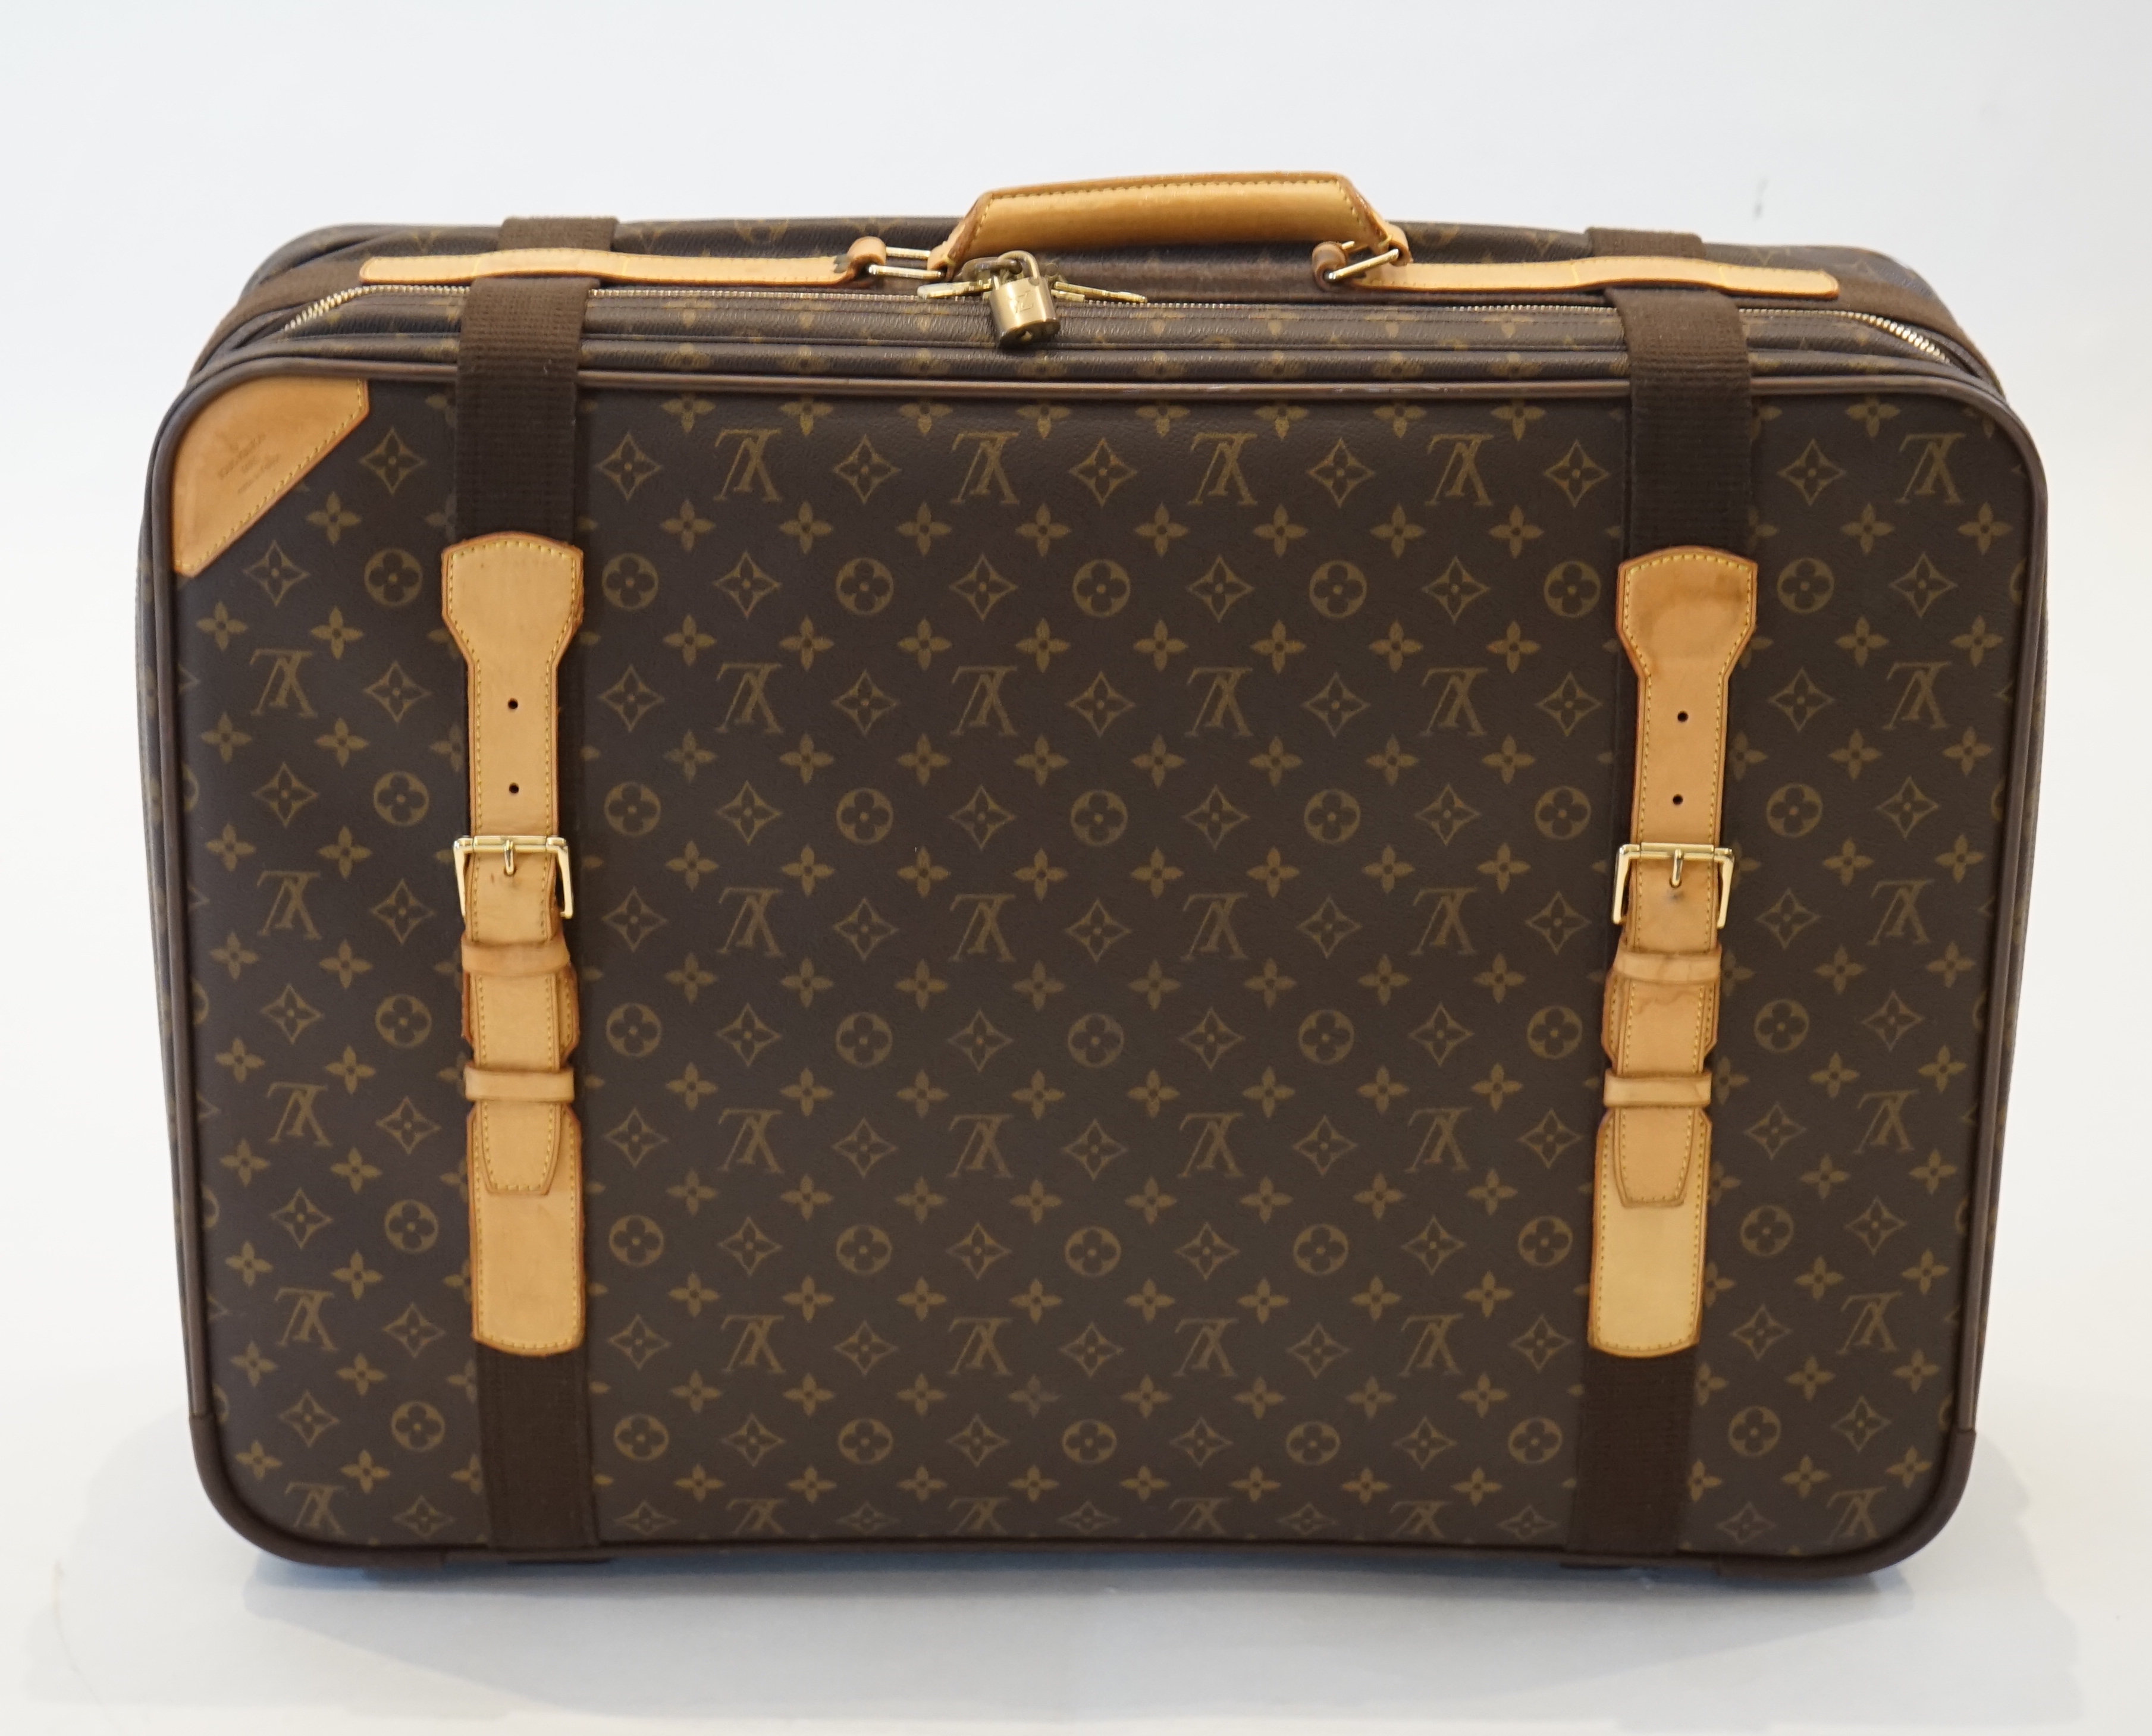 A Louis Vuitton Satellite 65 travel bag width 65cm, depth 19cm, height 46cm